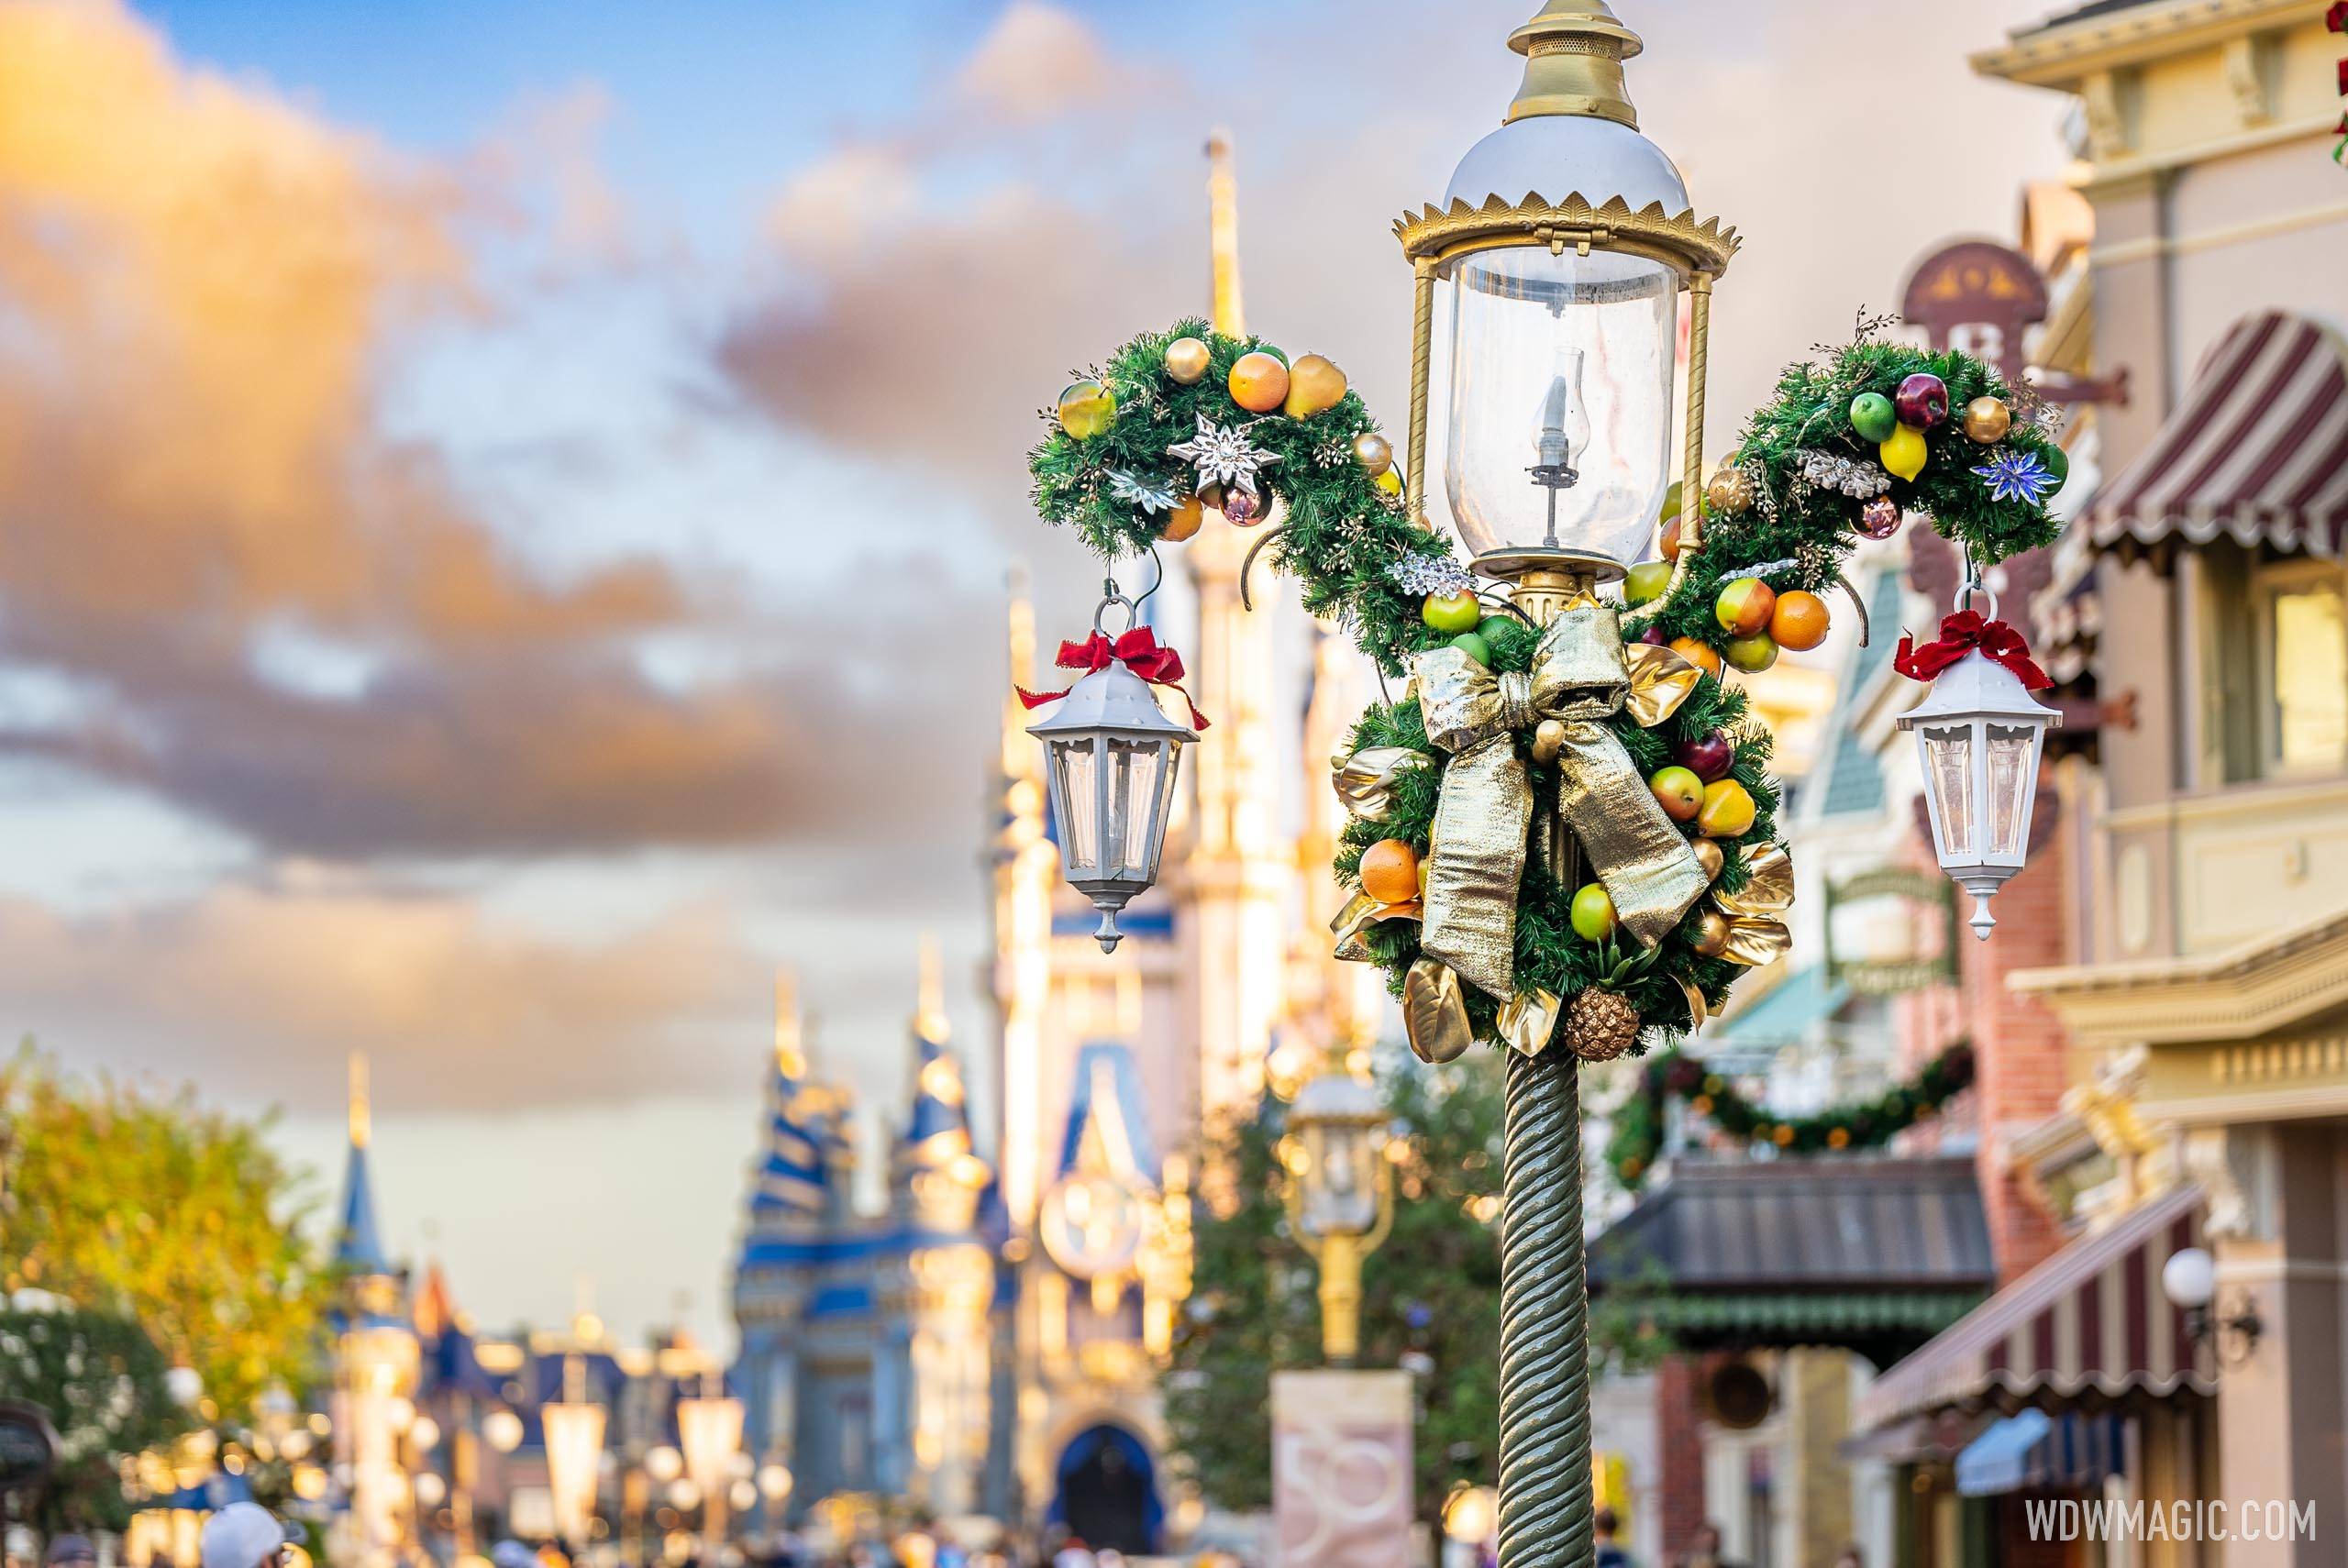 Magic Kingdom first holiday decorations 2022 - November 1 2022